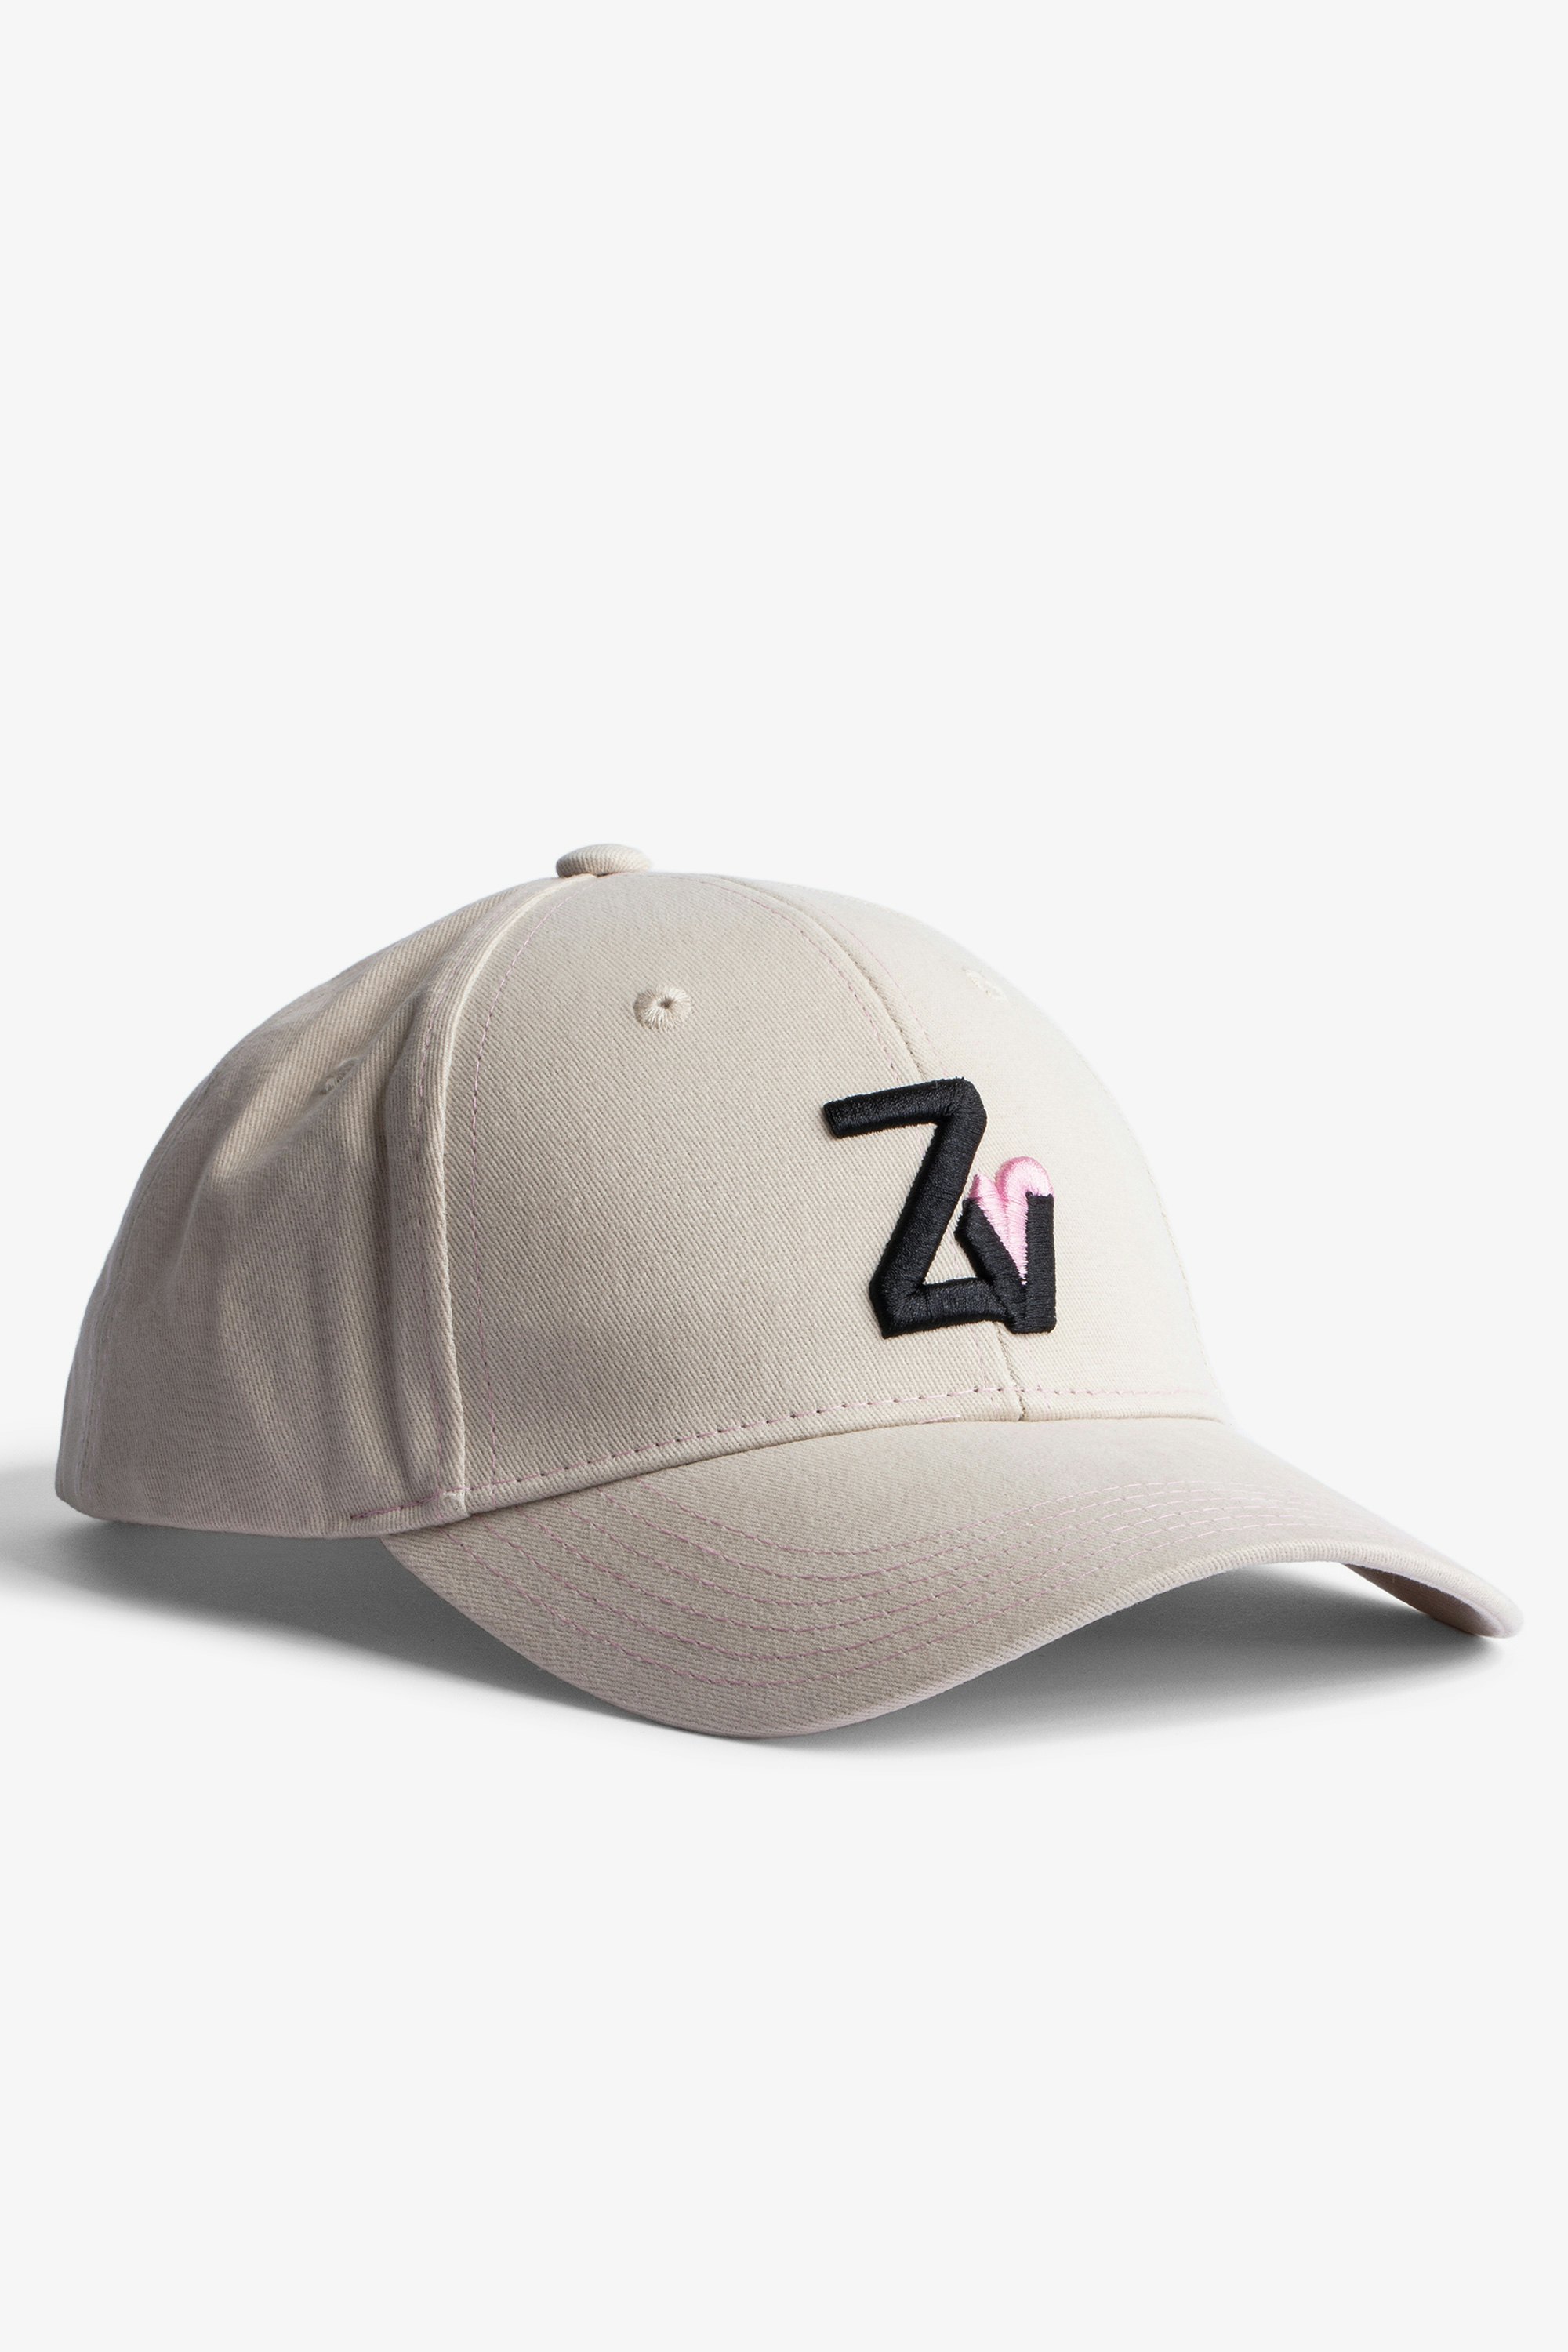 ZV Crush Klelia Cap Women's cap with ZV embroidery in white